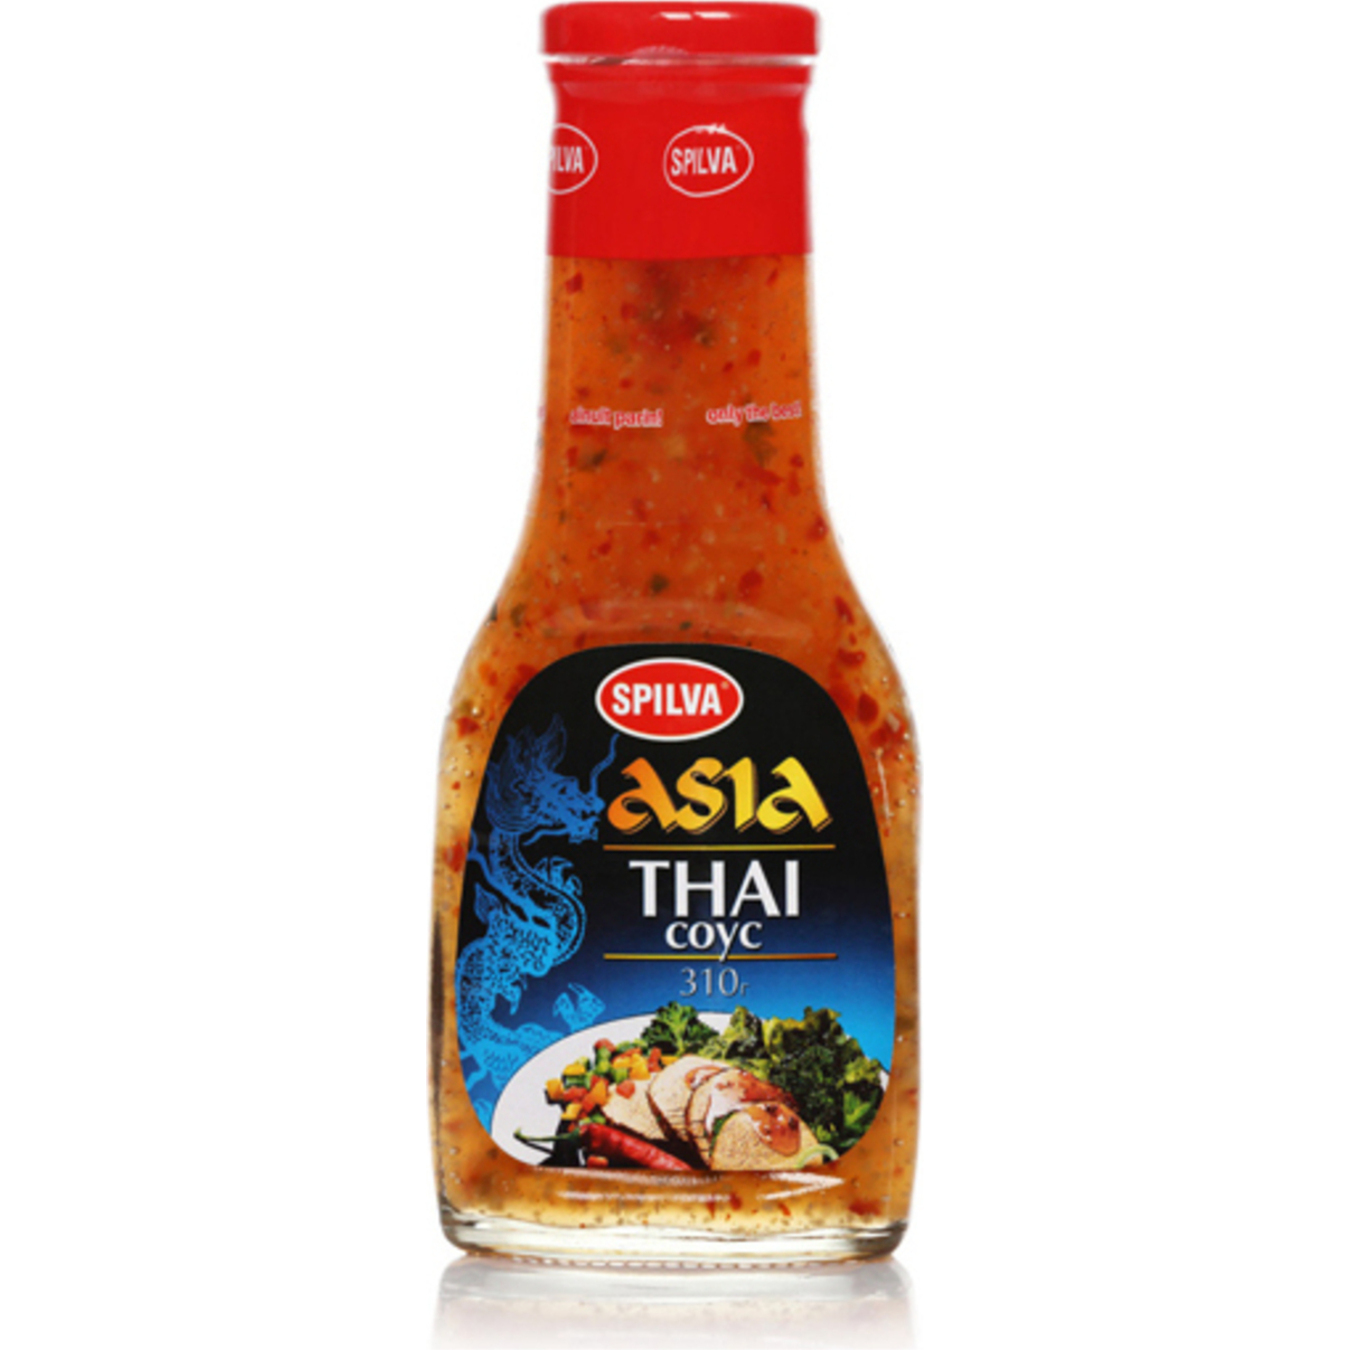 Spilva Asia Thai Sauce 310g